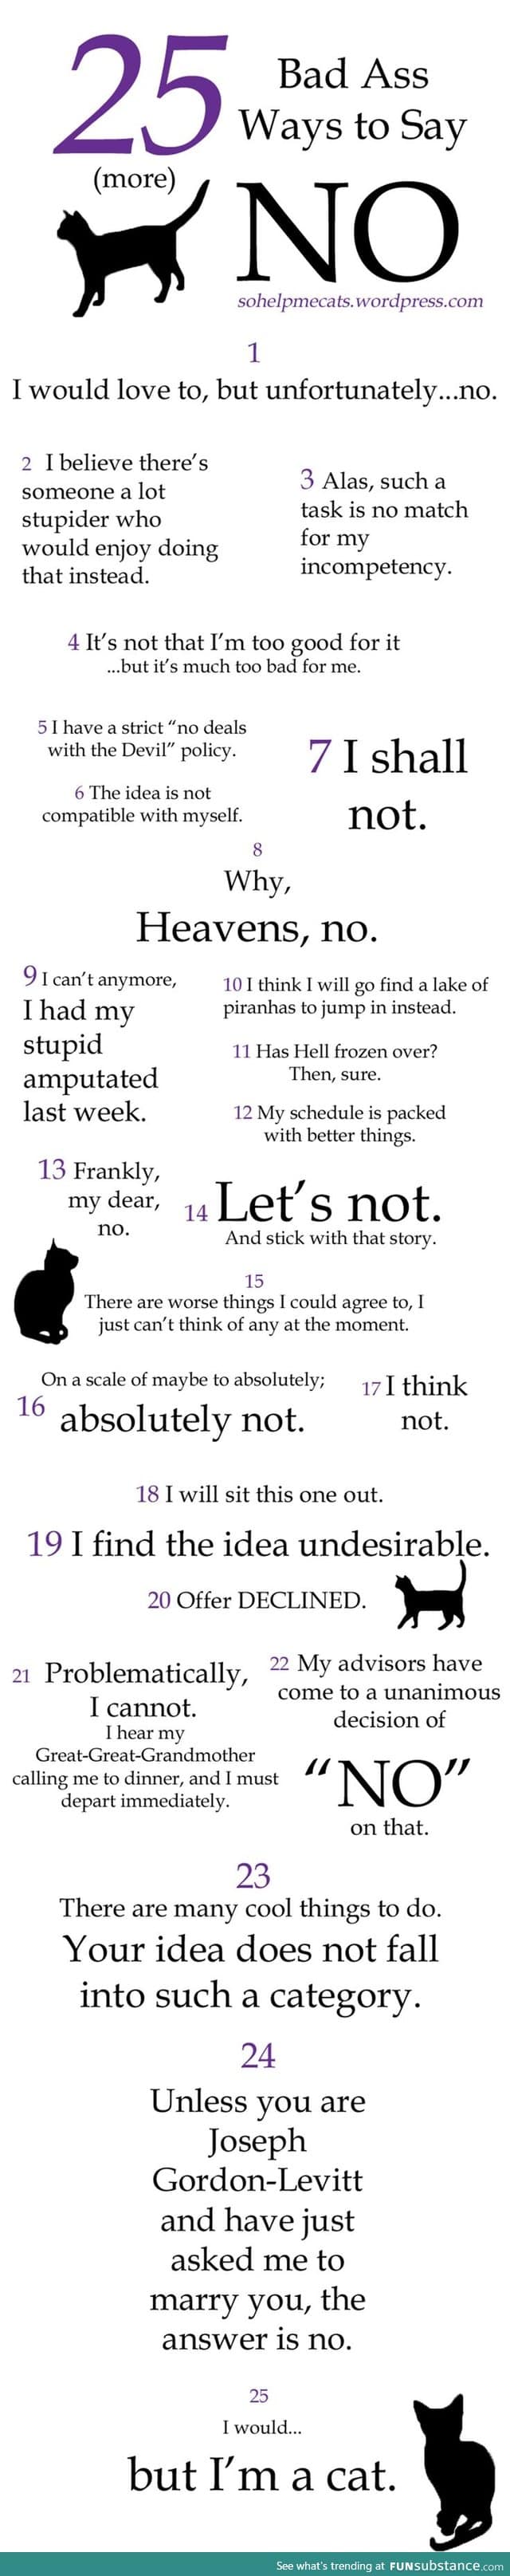 Ways to say no